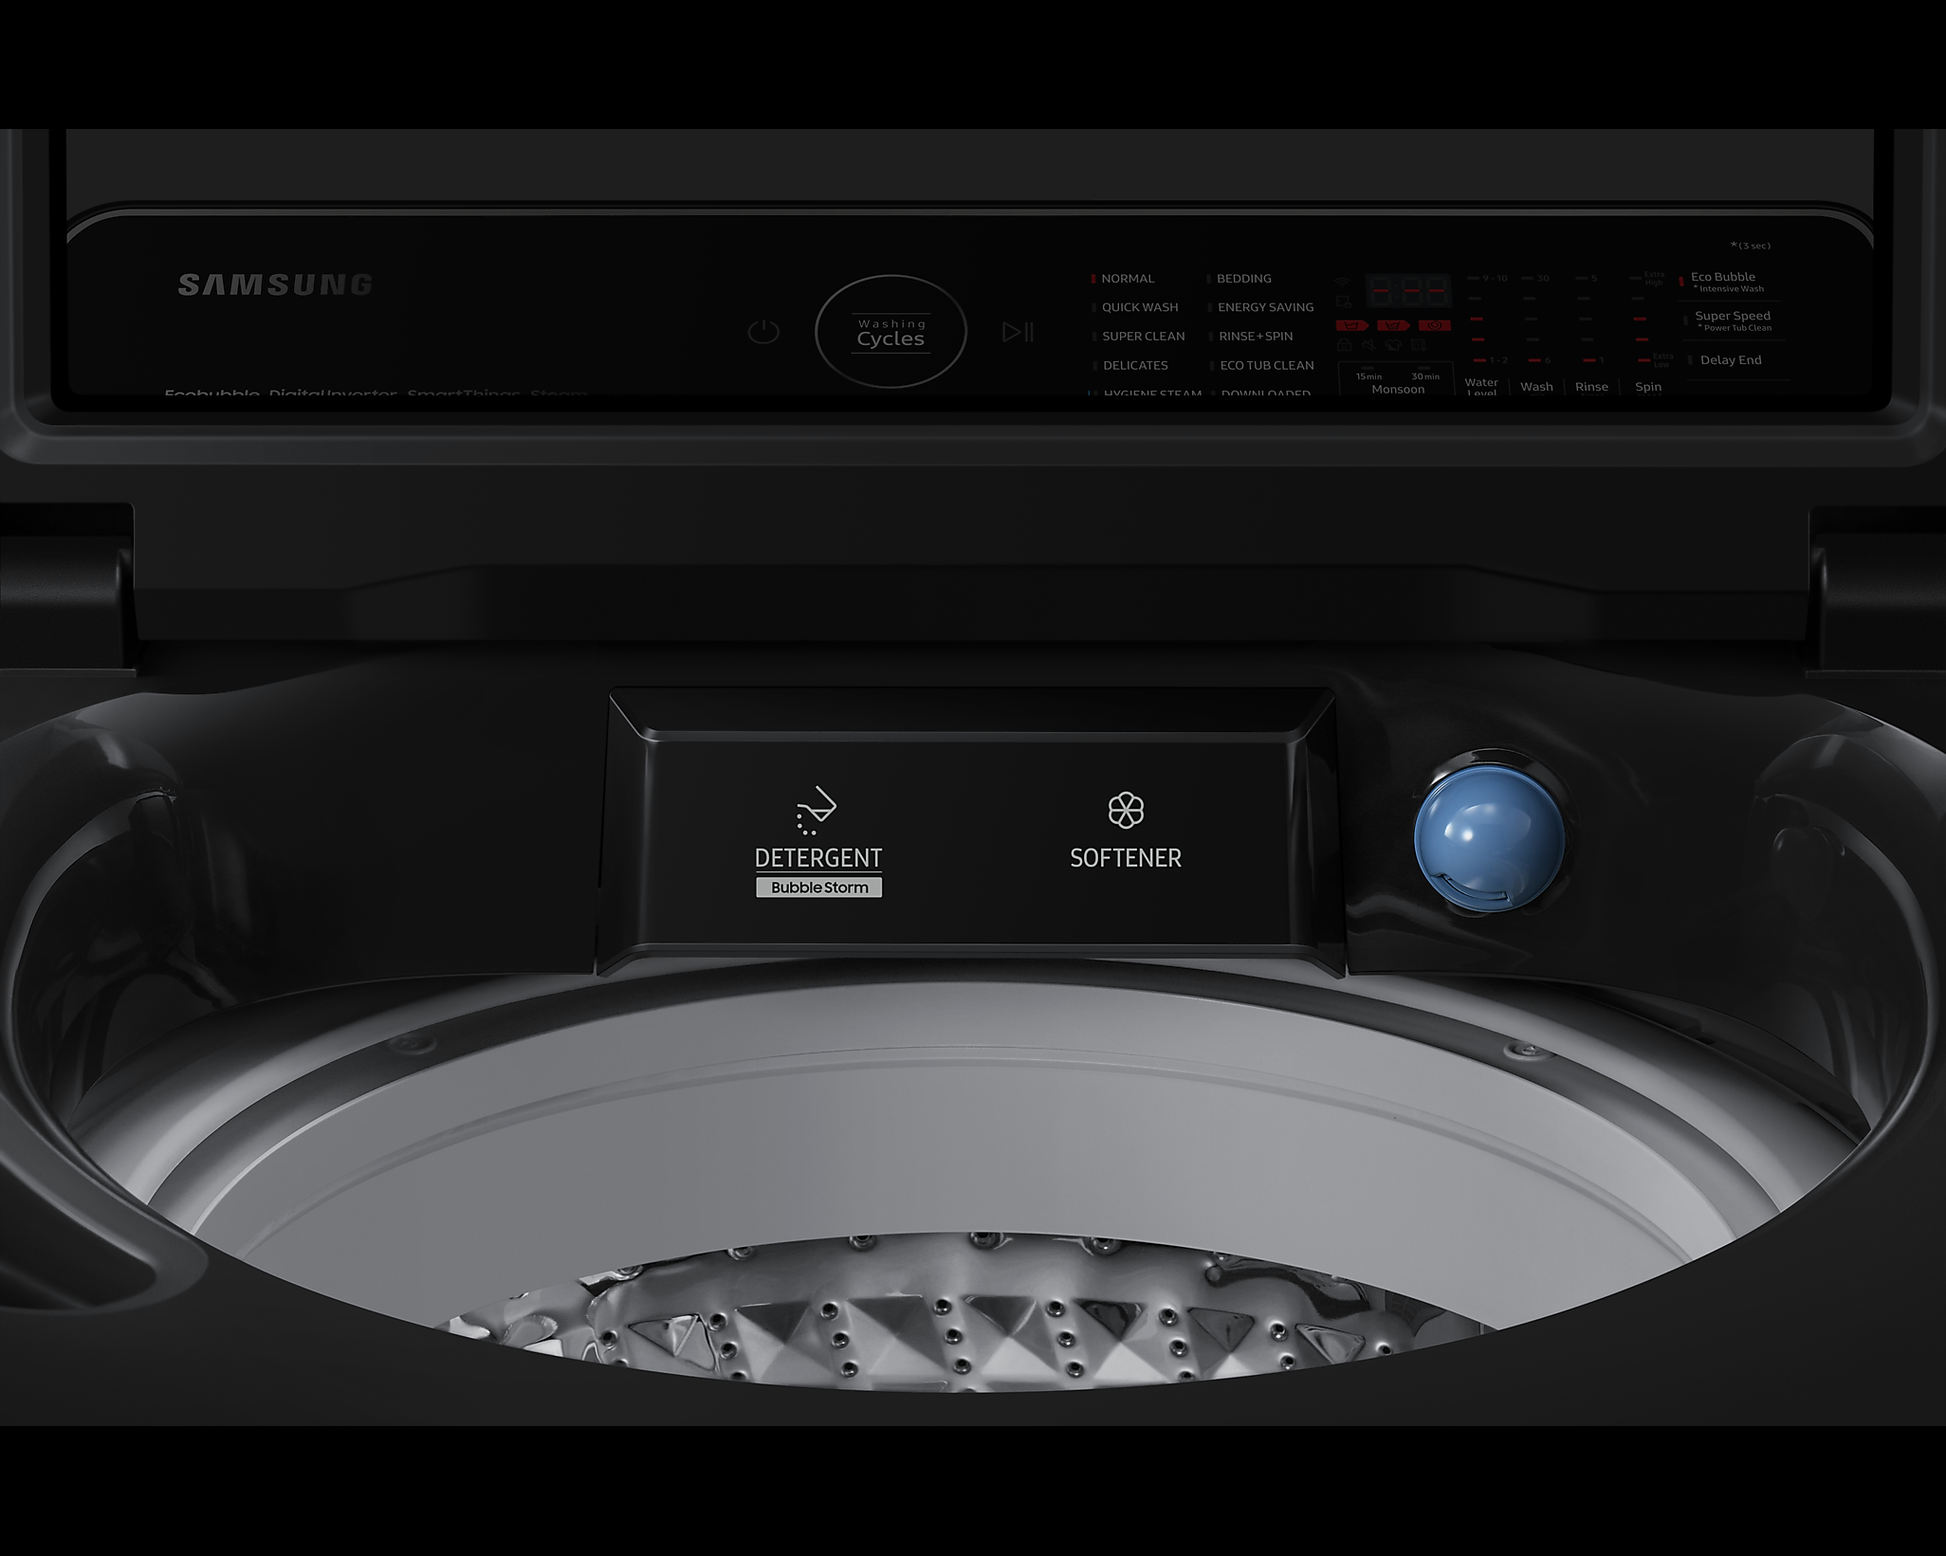 Samsung WA11CG5886BV 11.0 kg Top Load Washing Machine with Wi-Fi - Mahajan Electronics Online